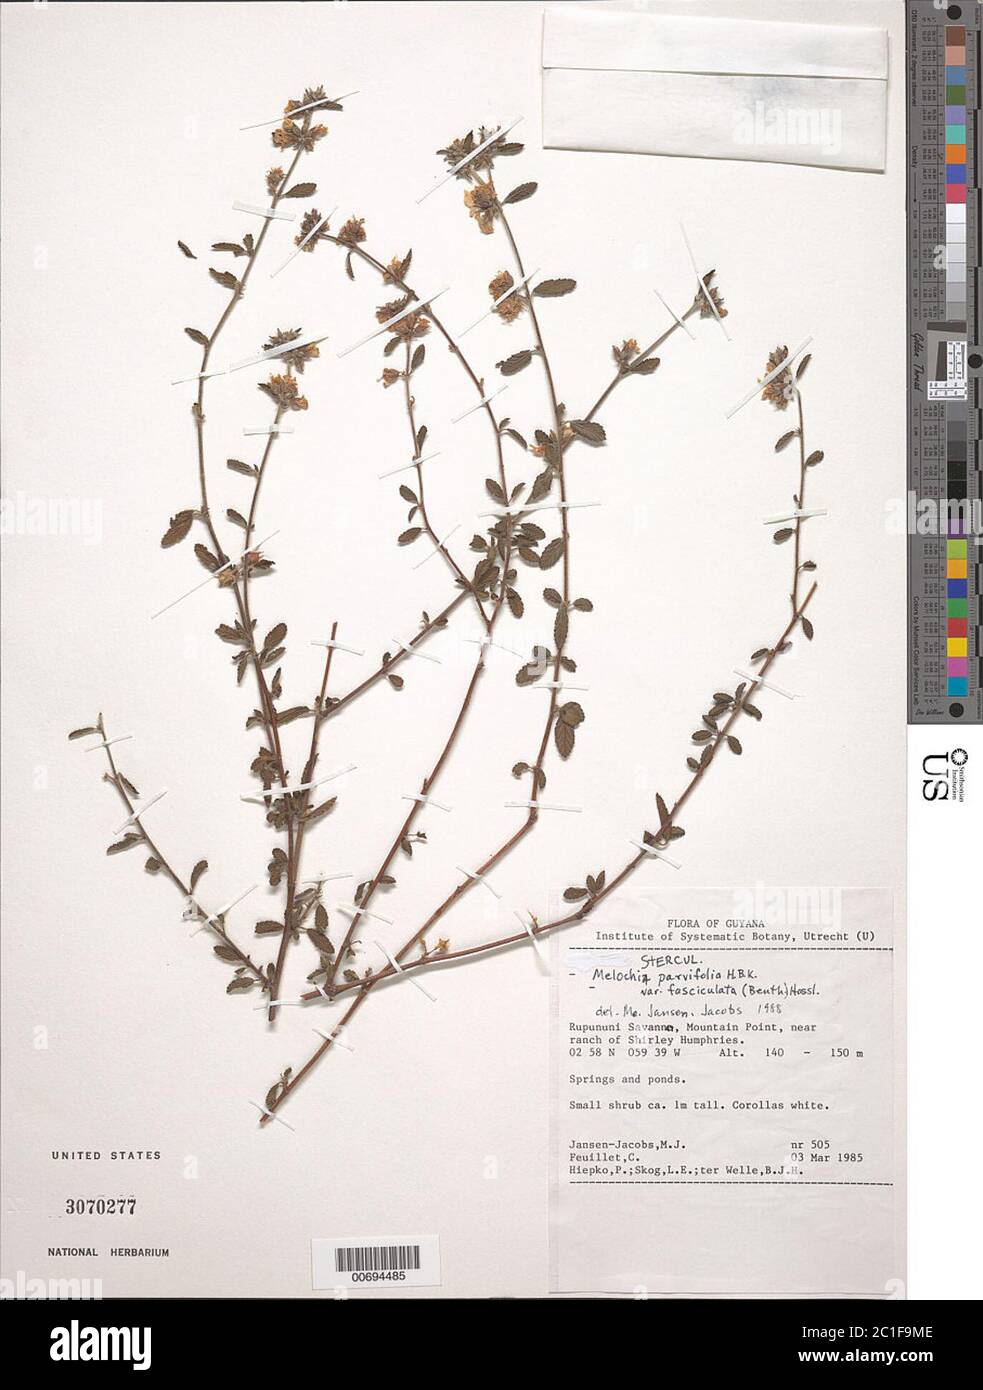 Melochia parvifolia var fasciculata Benth Hassl Melochia parvifolia var fasciculata Benth Hassl. Stock Photo